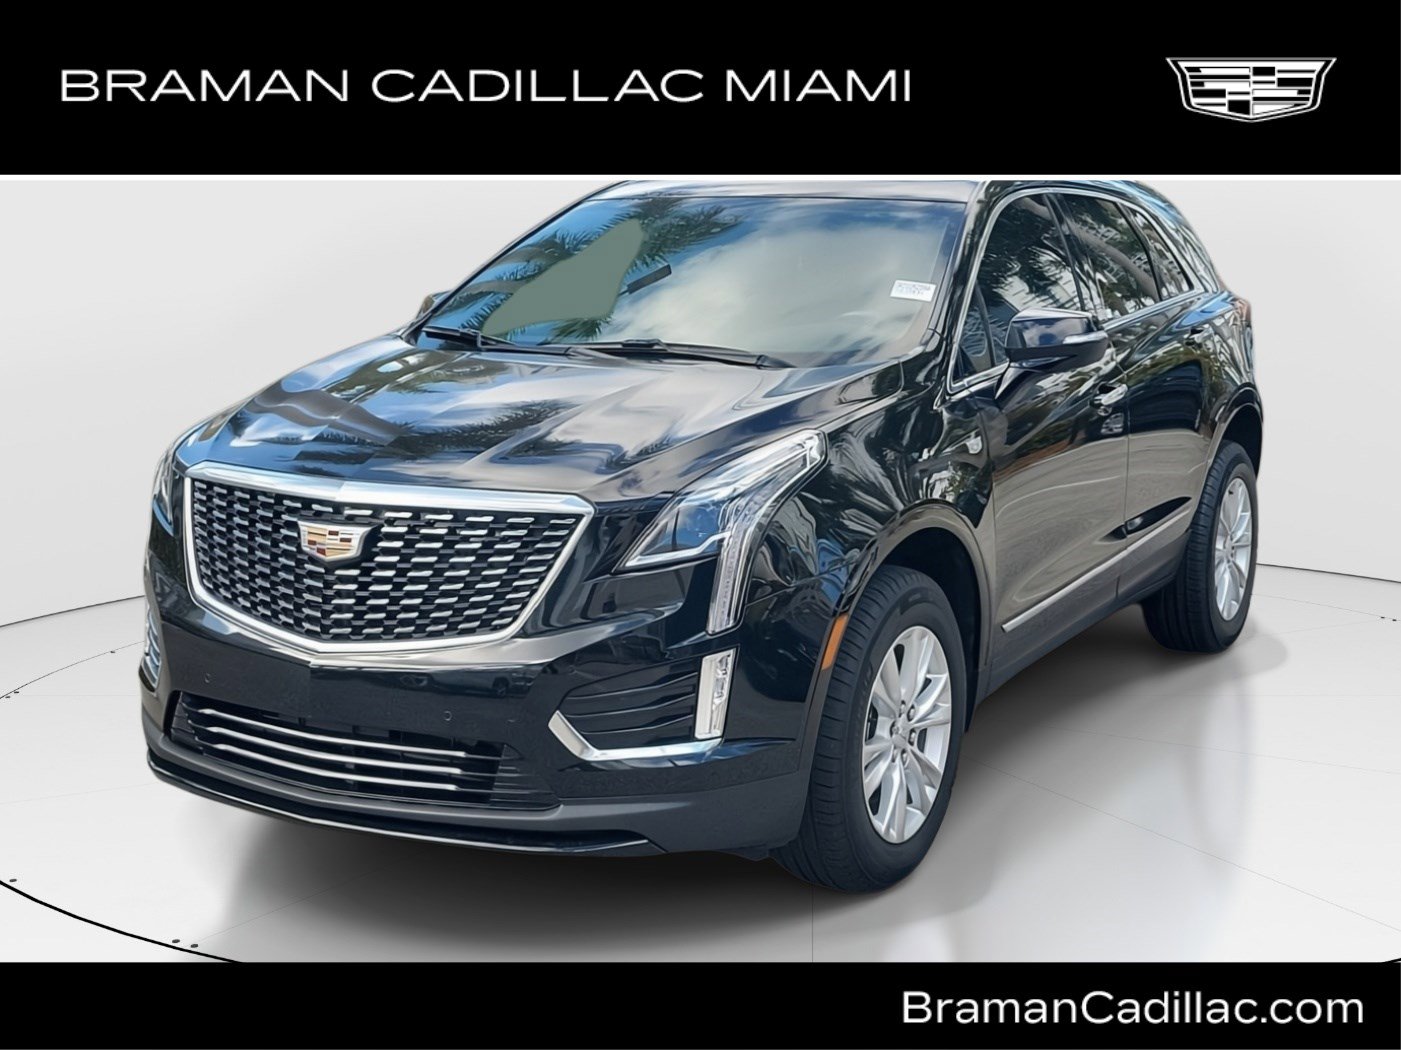 2021 Cadillac XT5 Miami FL